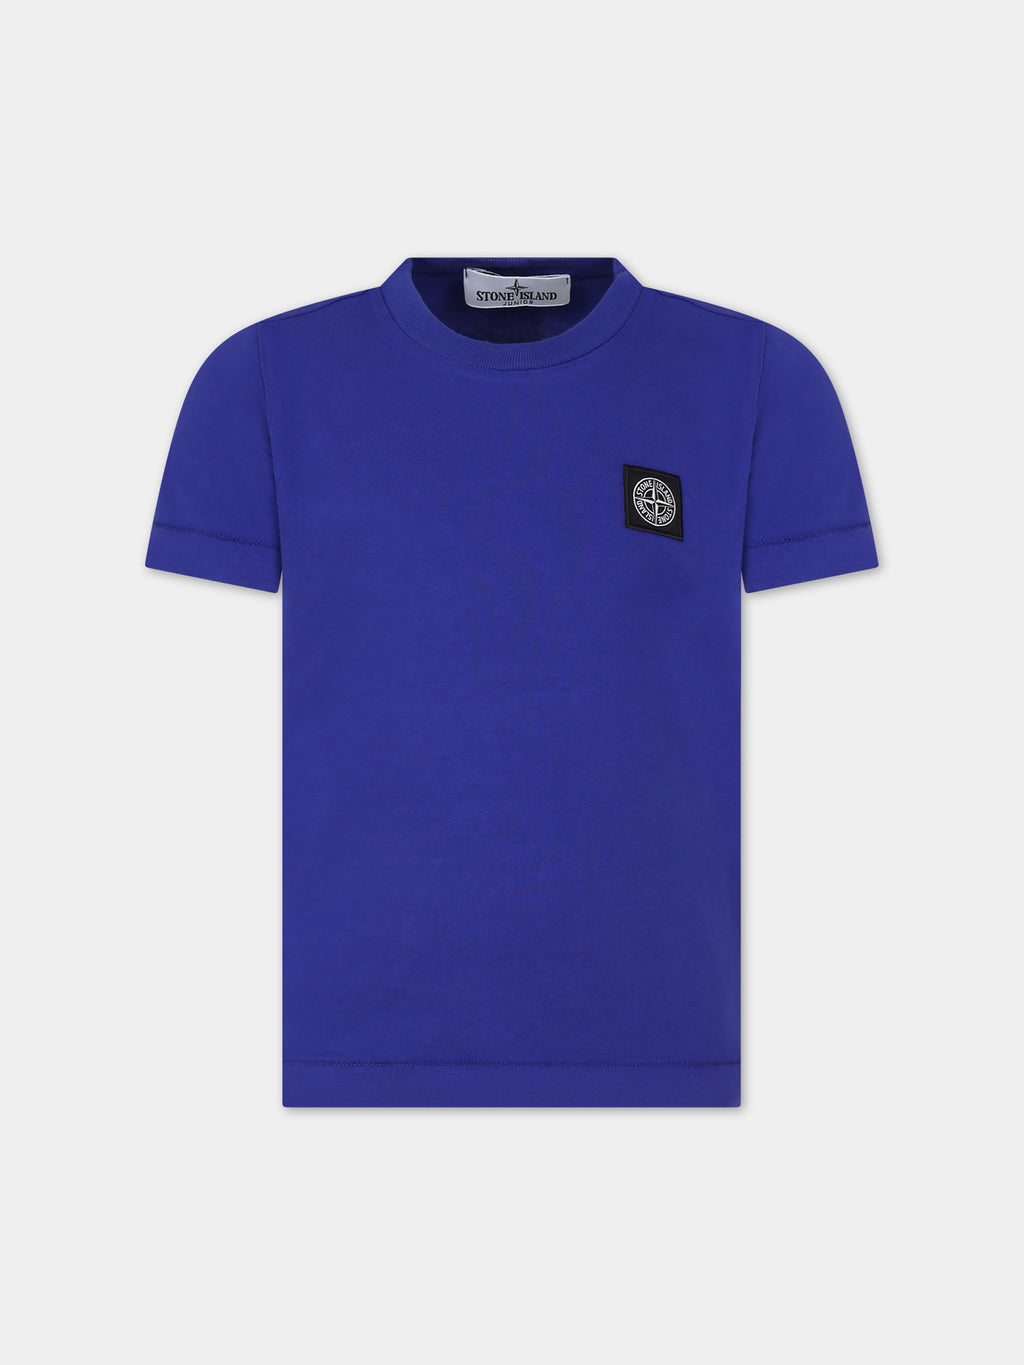 T-shirt bleu ciel pour garçon avec logo